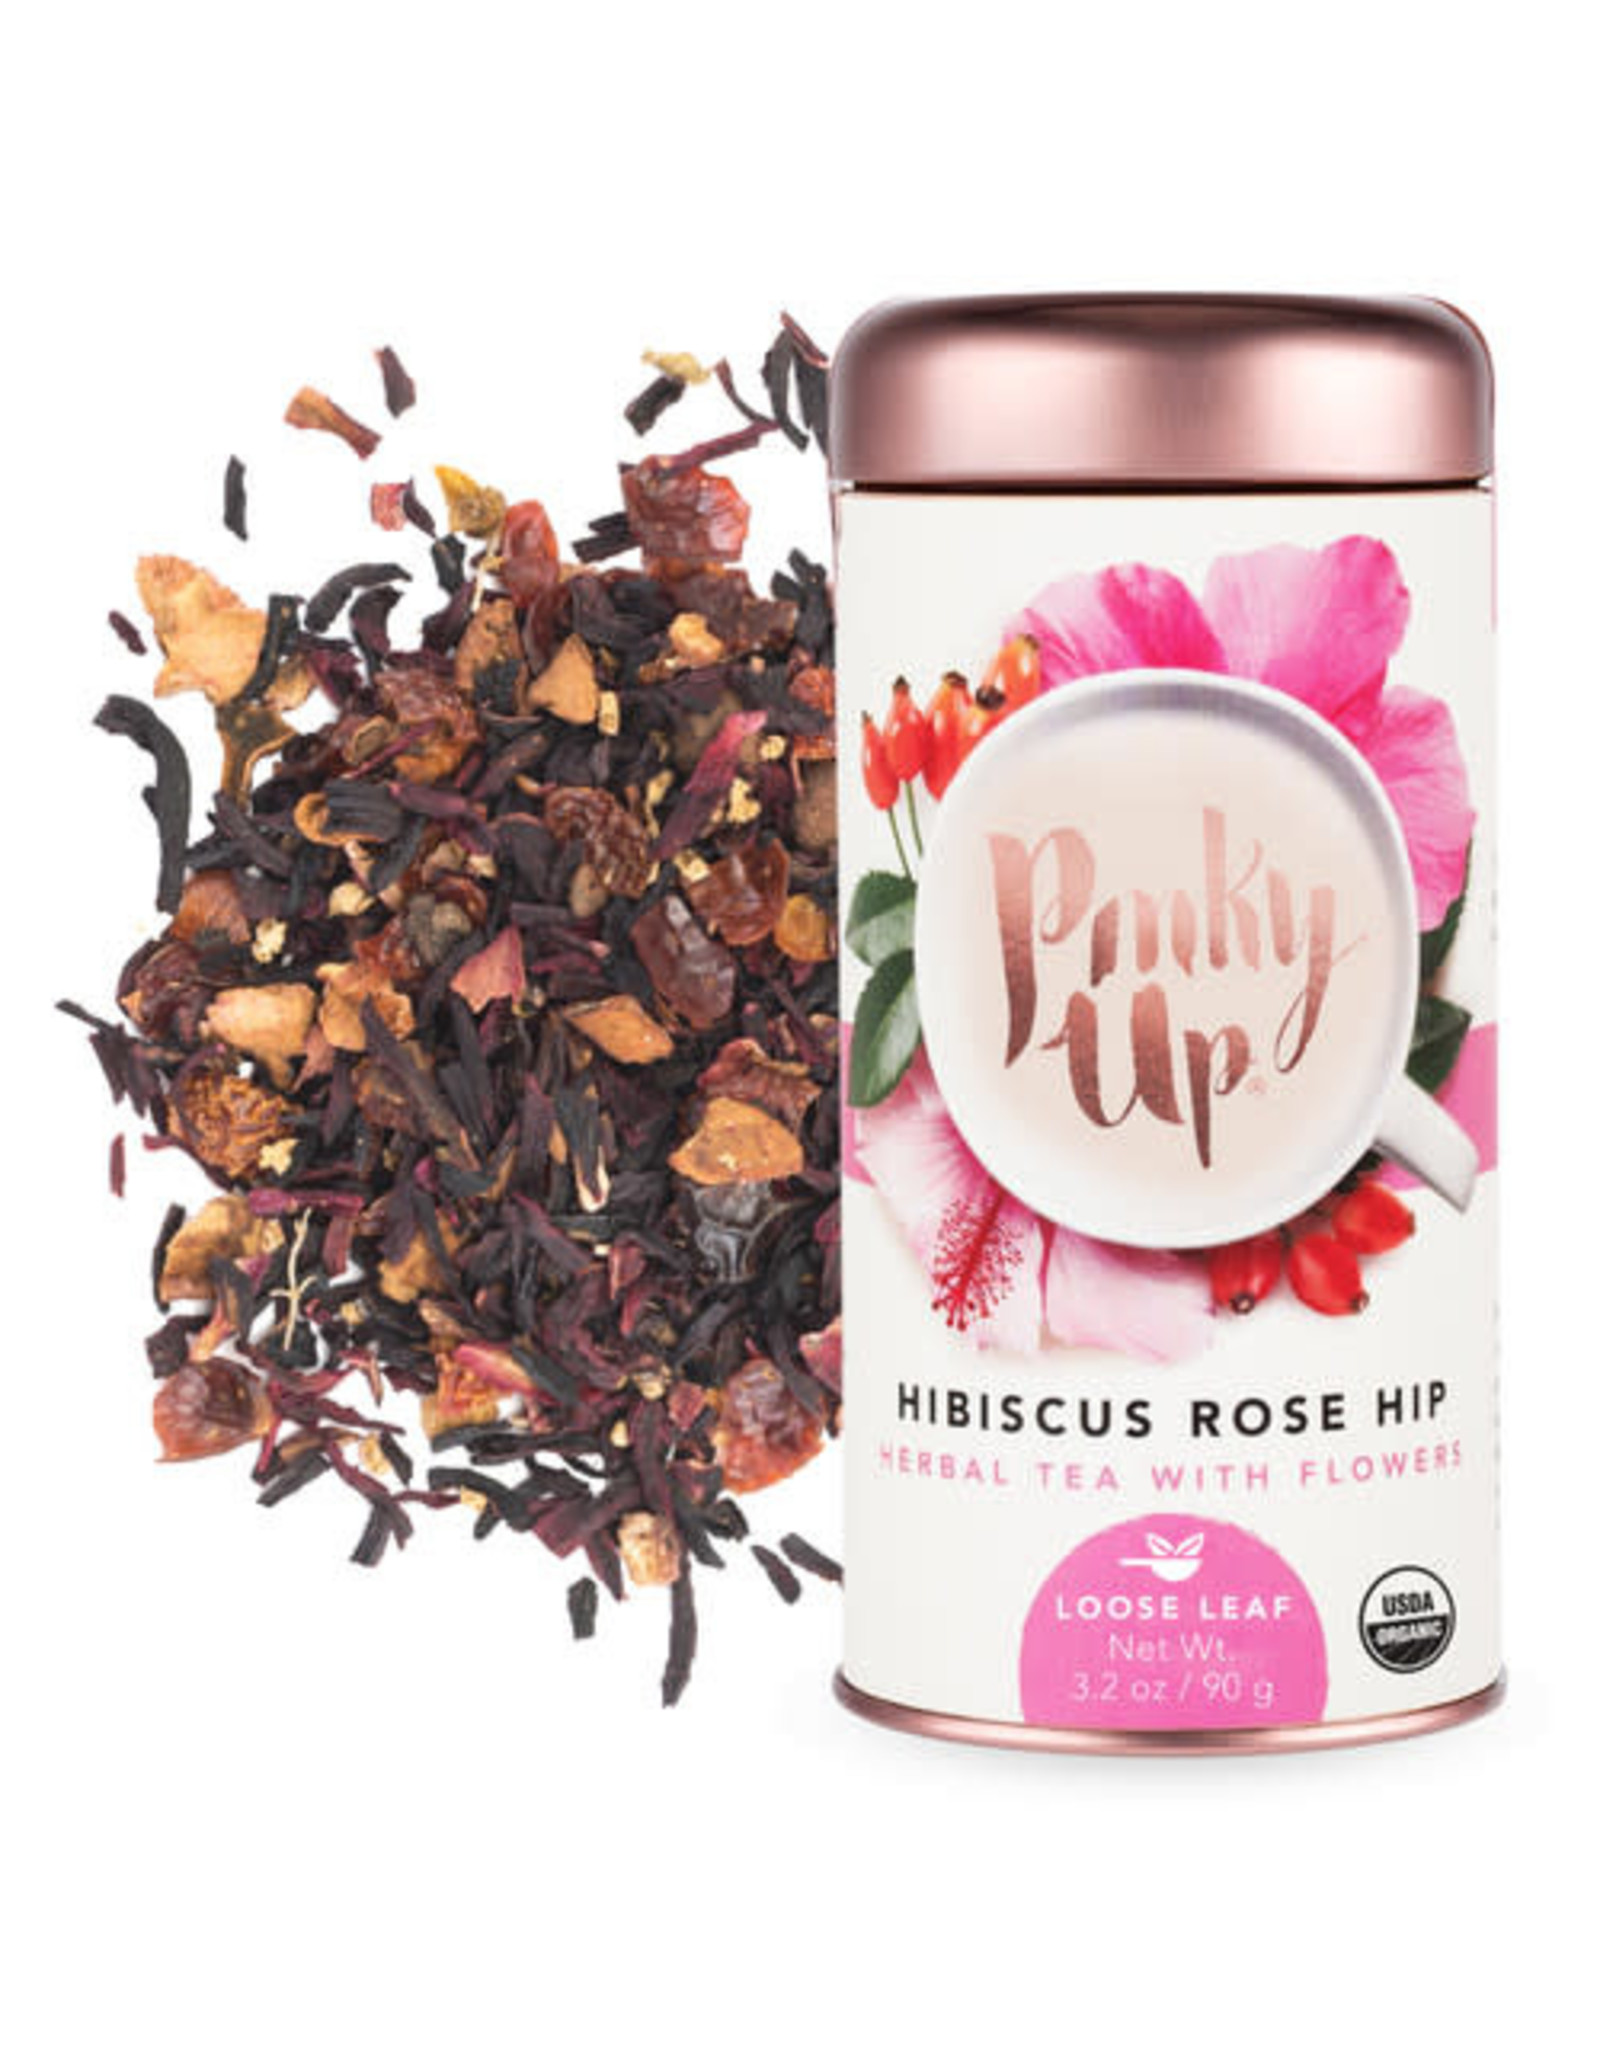 Pinky Up Hibiscus Rosehip Loose Leaf Tea